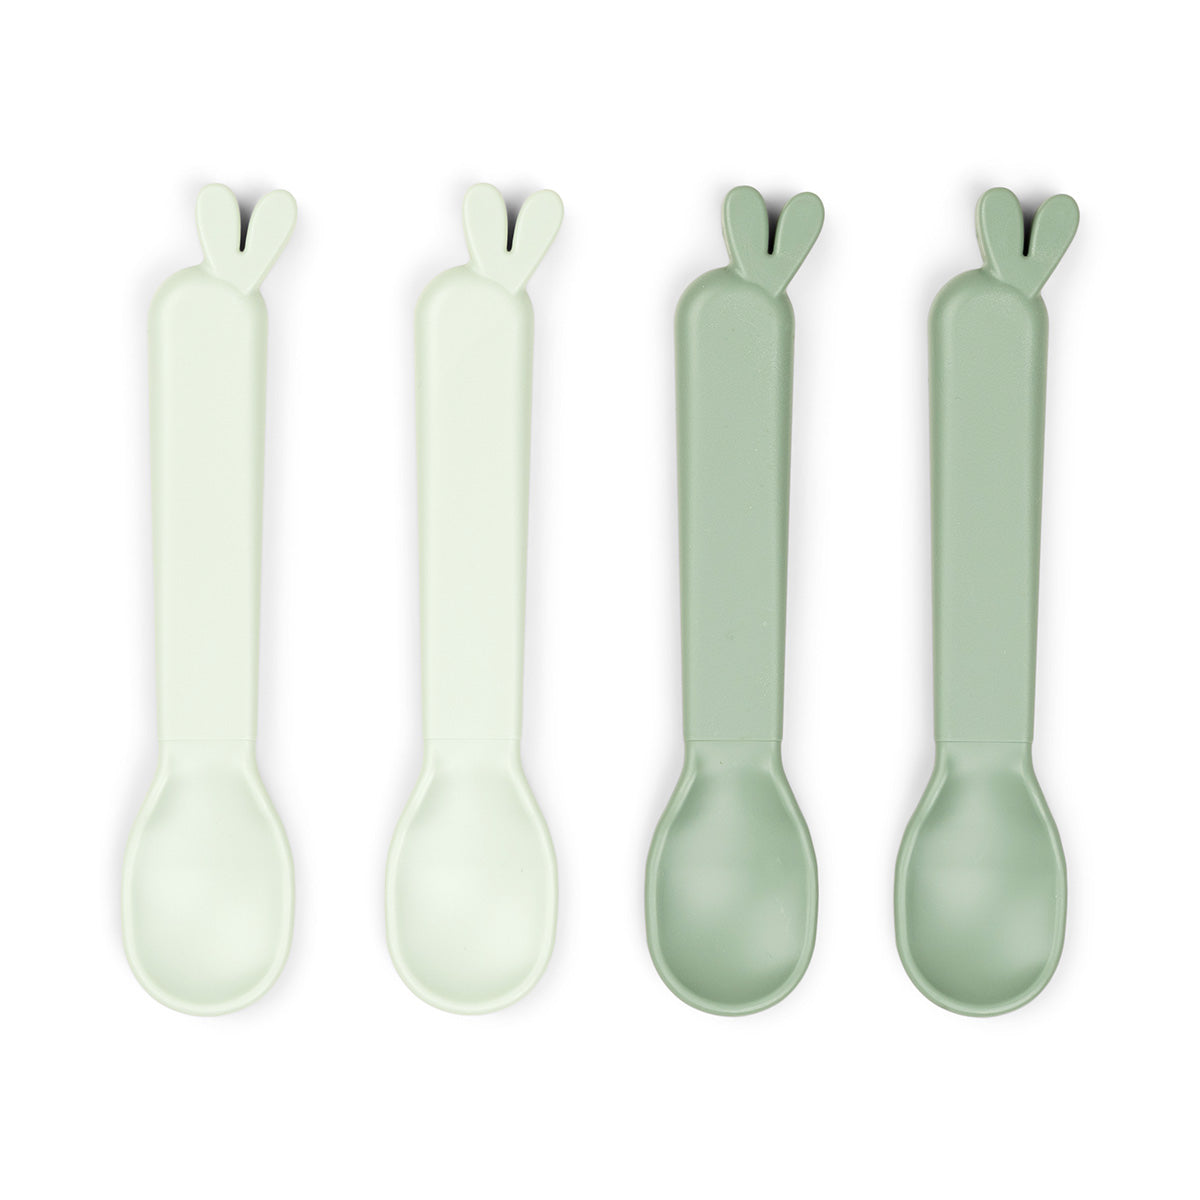 Kiddish spoon 4-pack - Lalee - Green